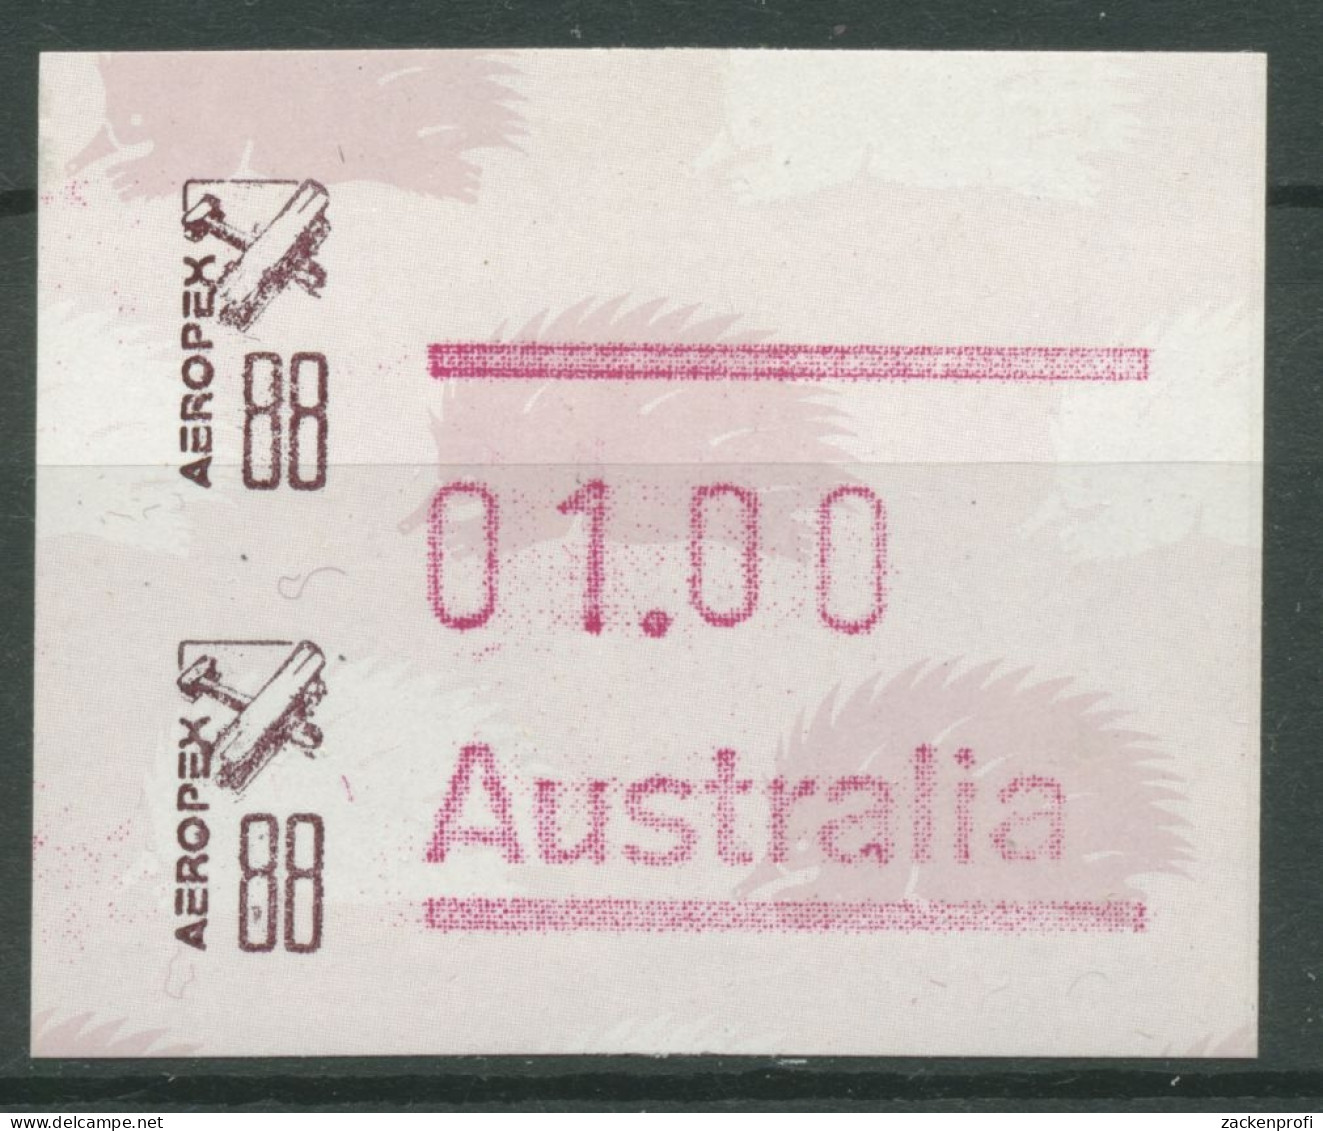 Australien 1988 AEROPEX '88 Adelaide Automatenmarke 10 Postfrisch - Viñetas De Franqueo [ATM]